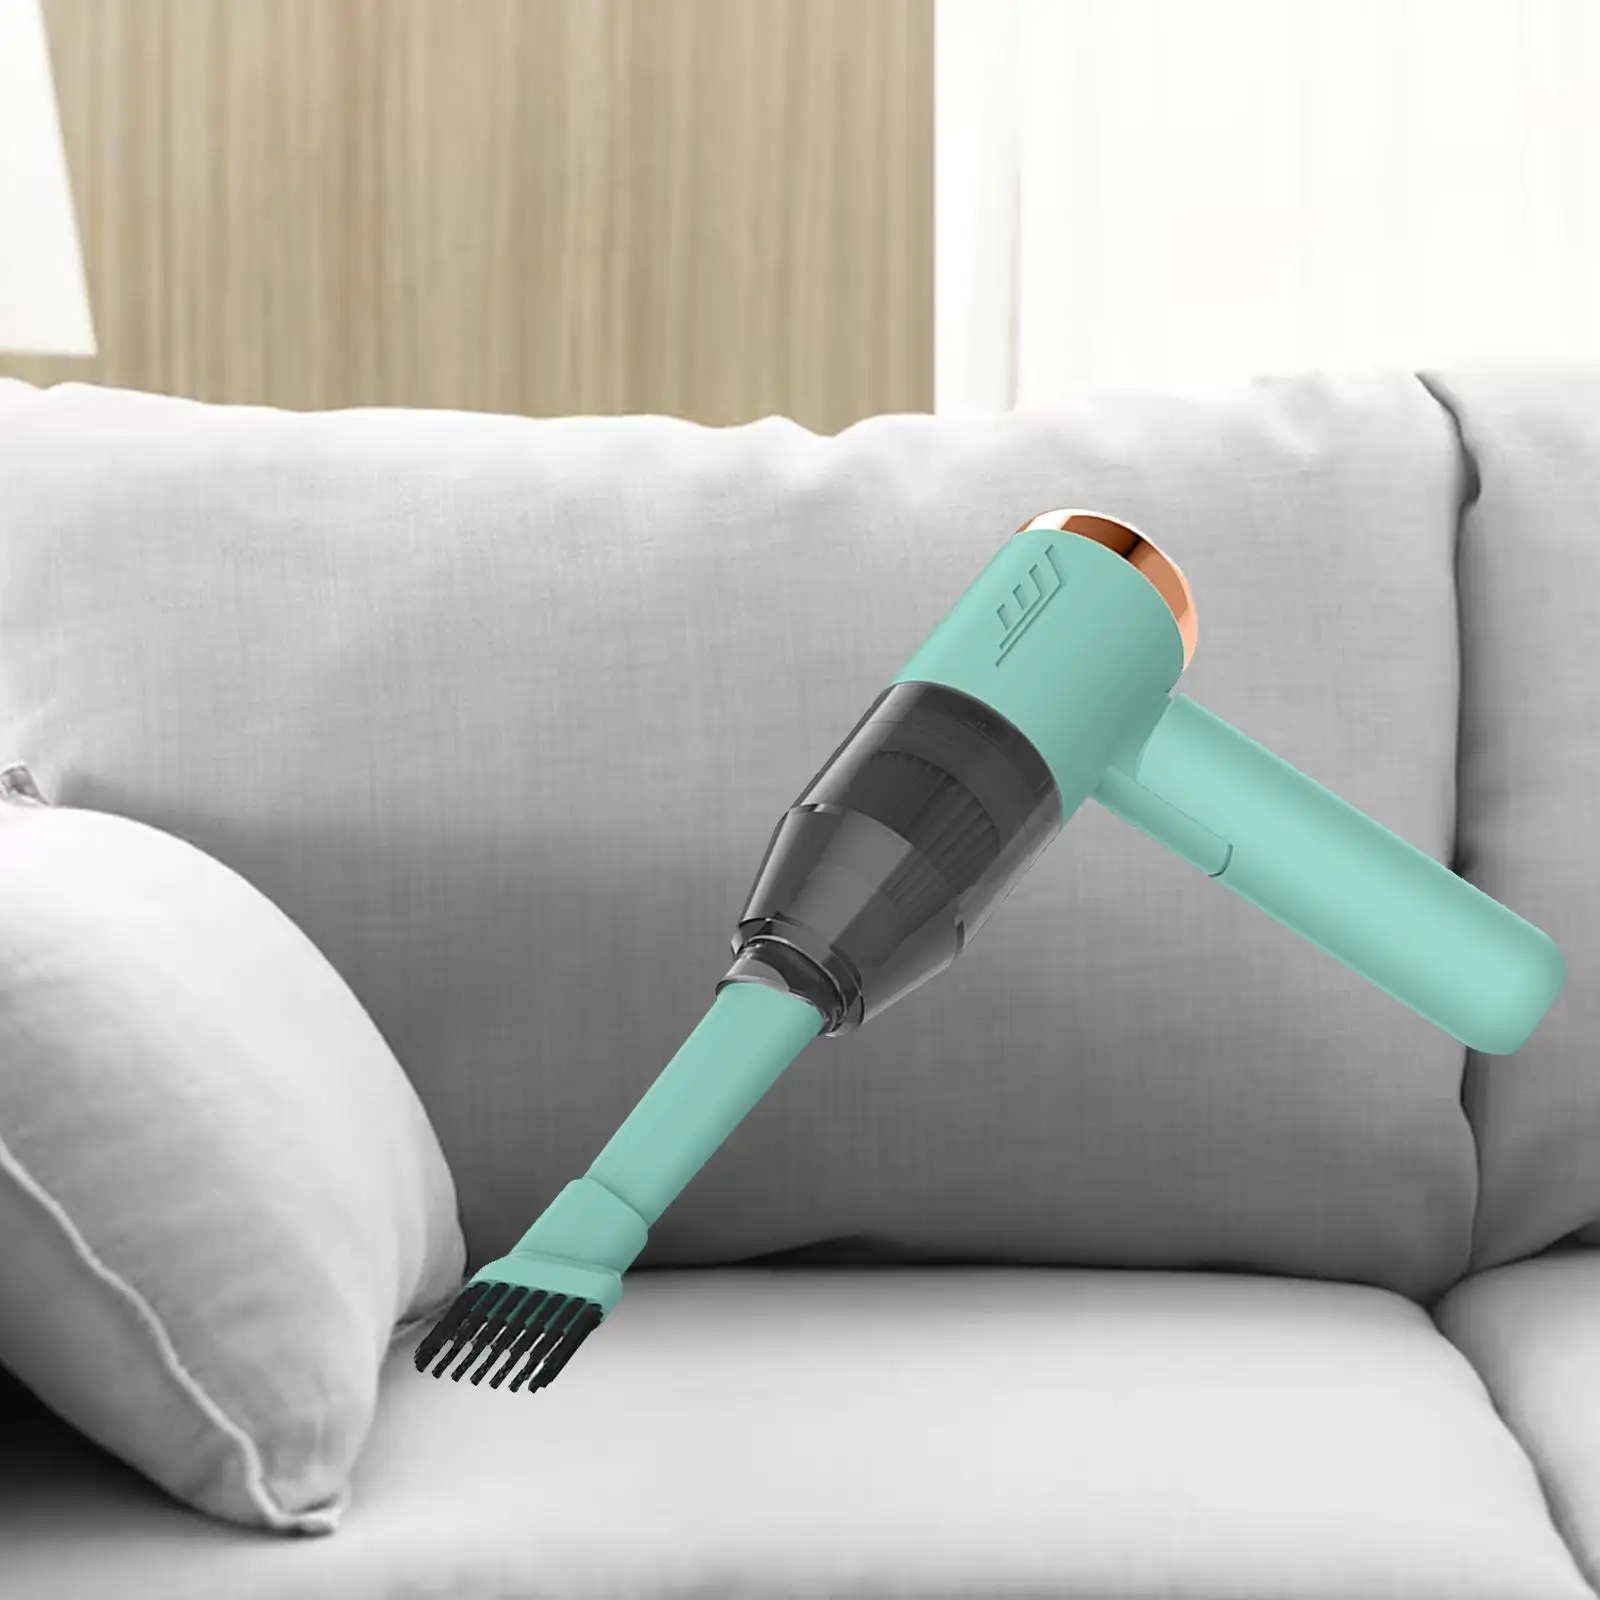 Handheld Vacuum Cleaner Lightweight Clean Environment 5W Small Car Vacuum for Home Pet Hair Keyboard Dust Car